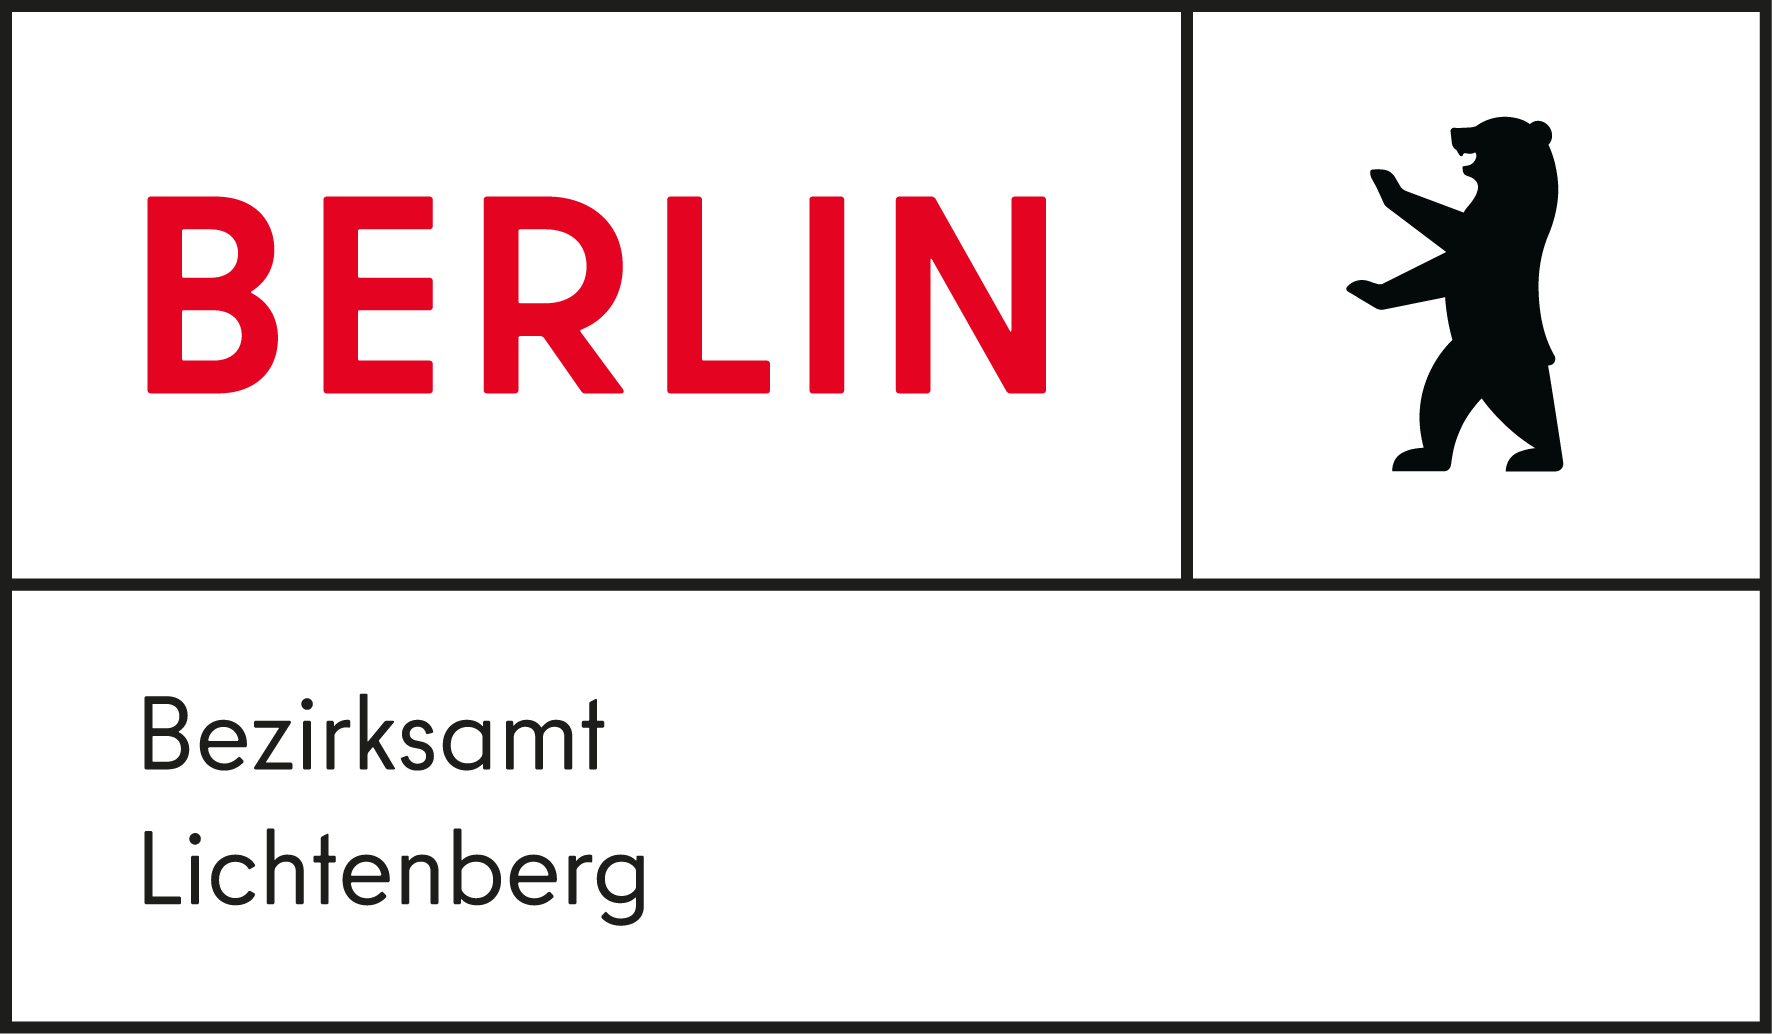 Logo Berlin 21